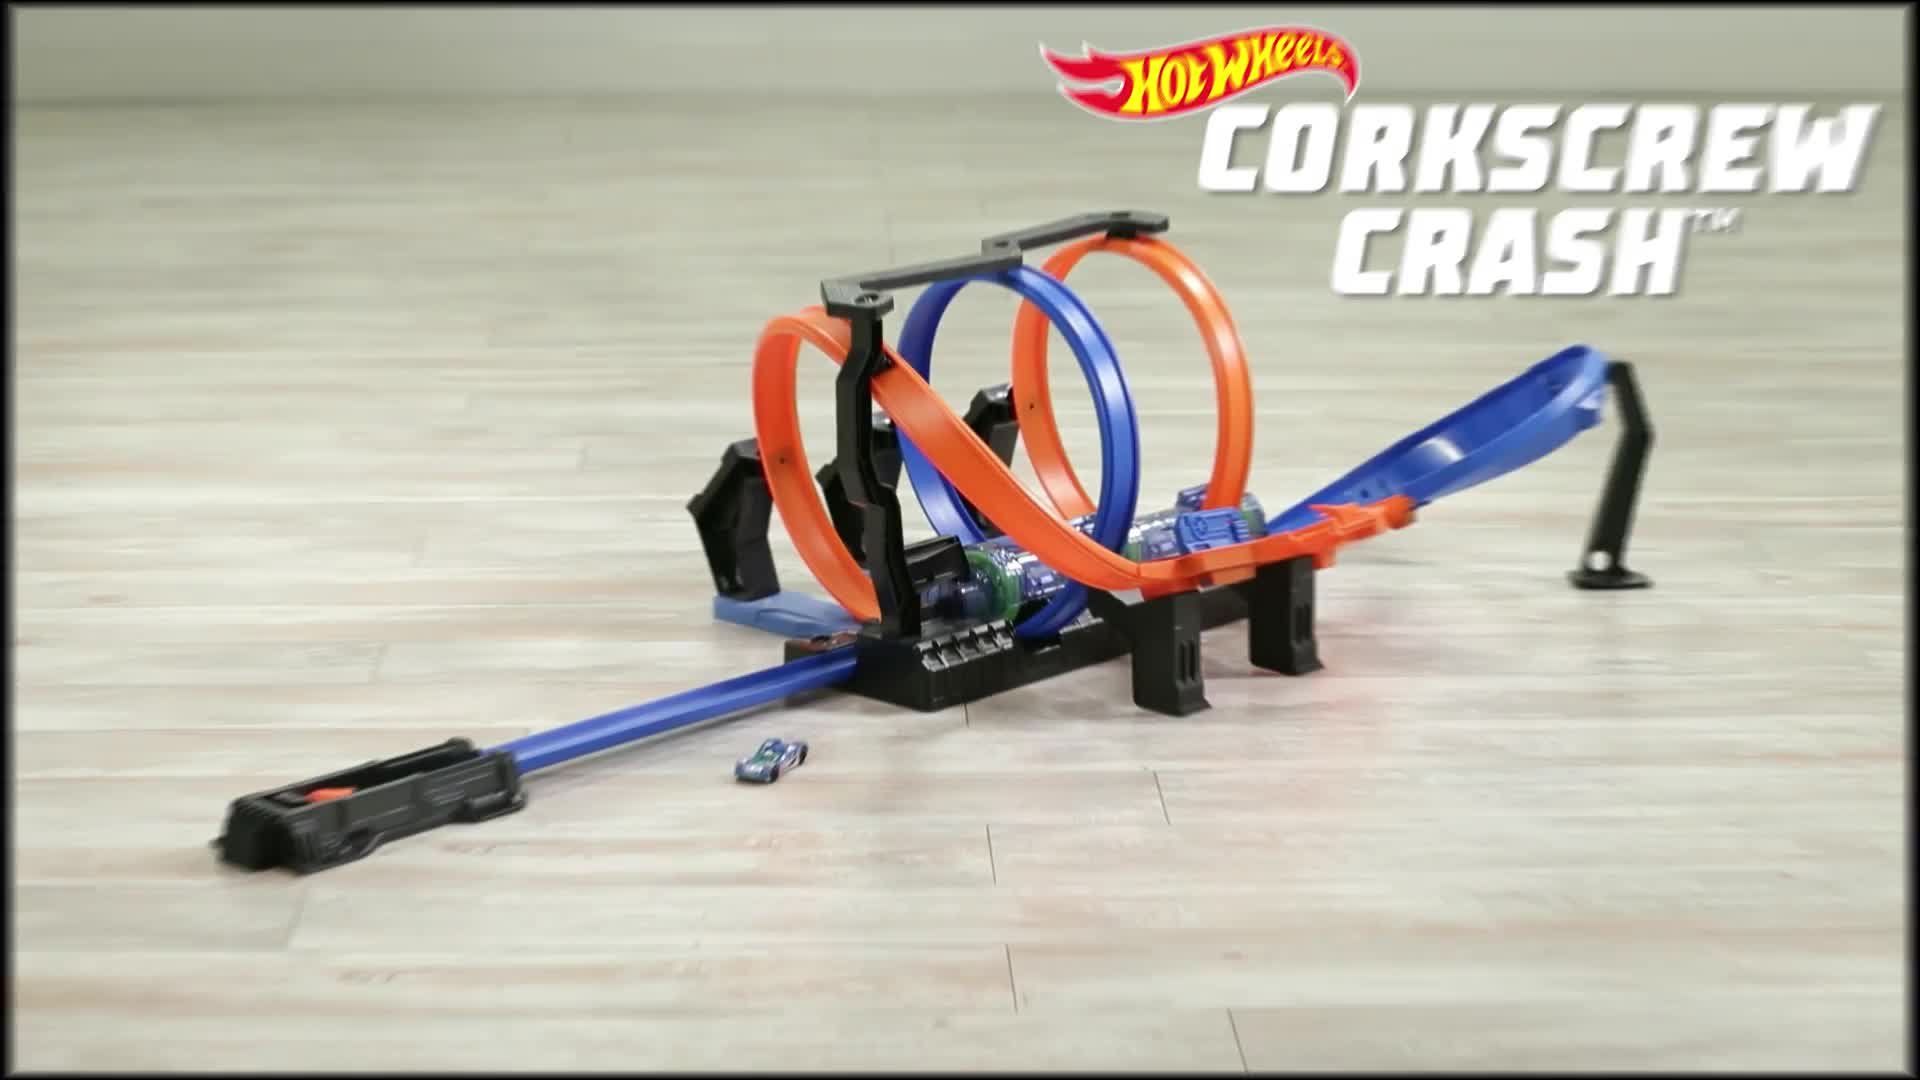 corkscrew crash track